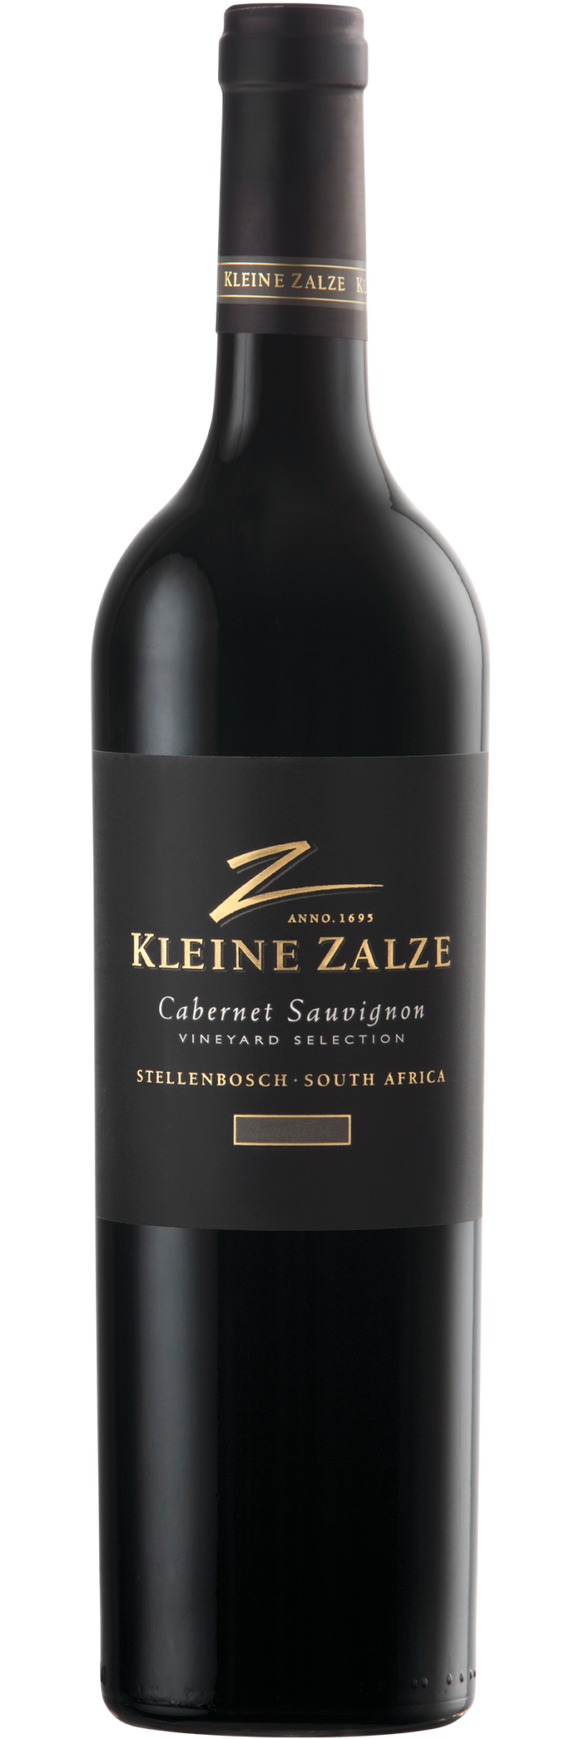 Kleine Zalze, Vineyard Selection Cabernet Sauvignon, 2019